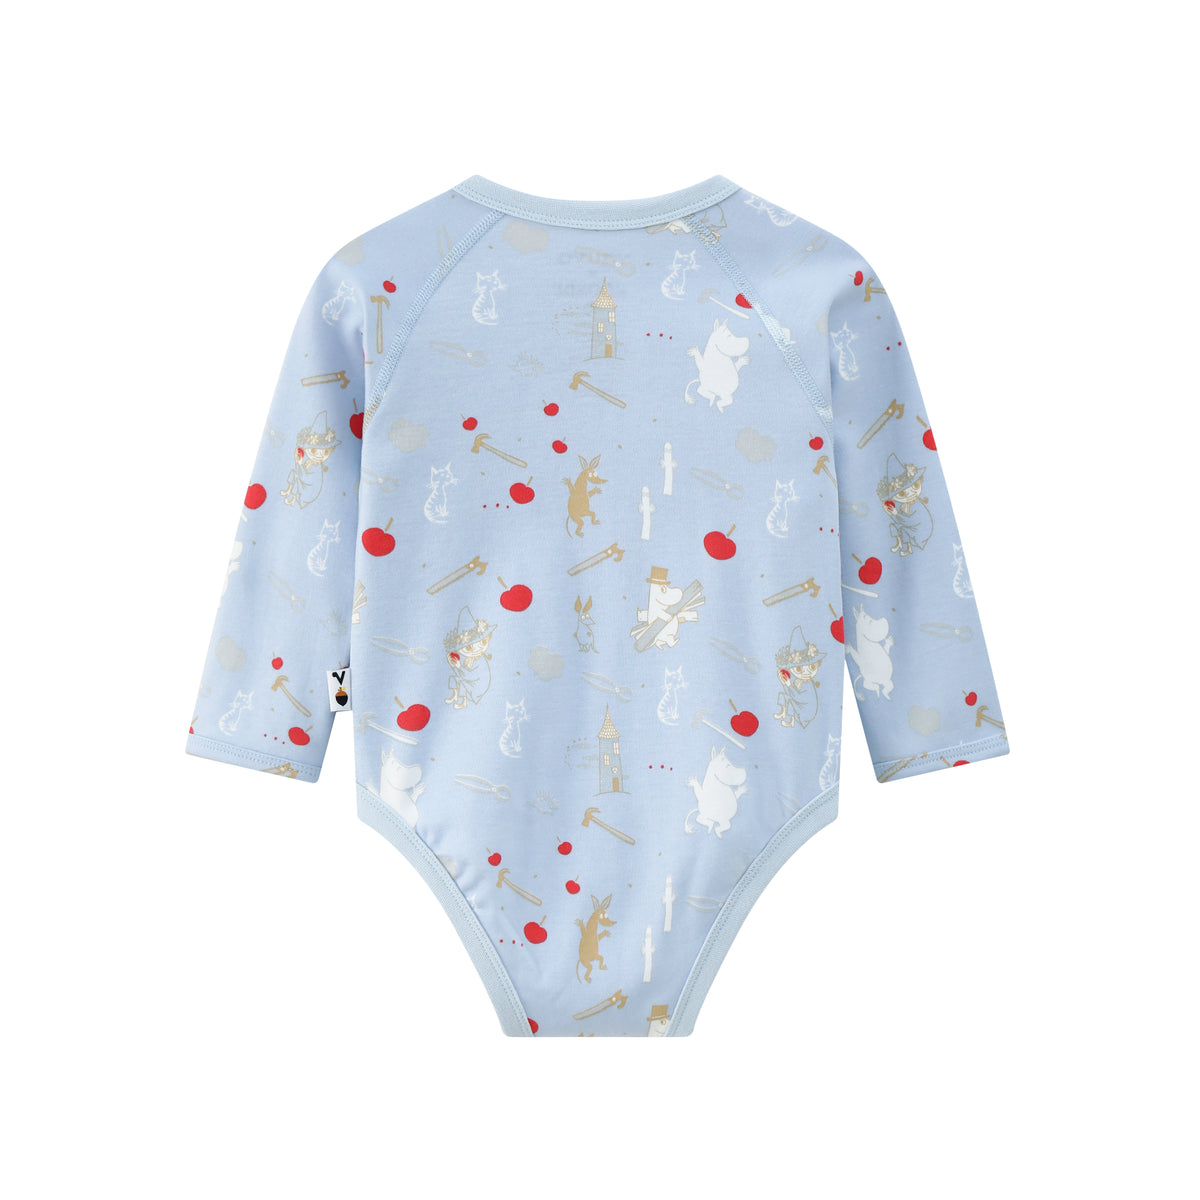 Vauva x Moomin FW23 - Baby Boys Moomin All Over Print Cotton Long Sleeve Bodysuit (Blue)